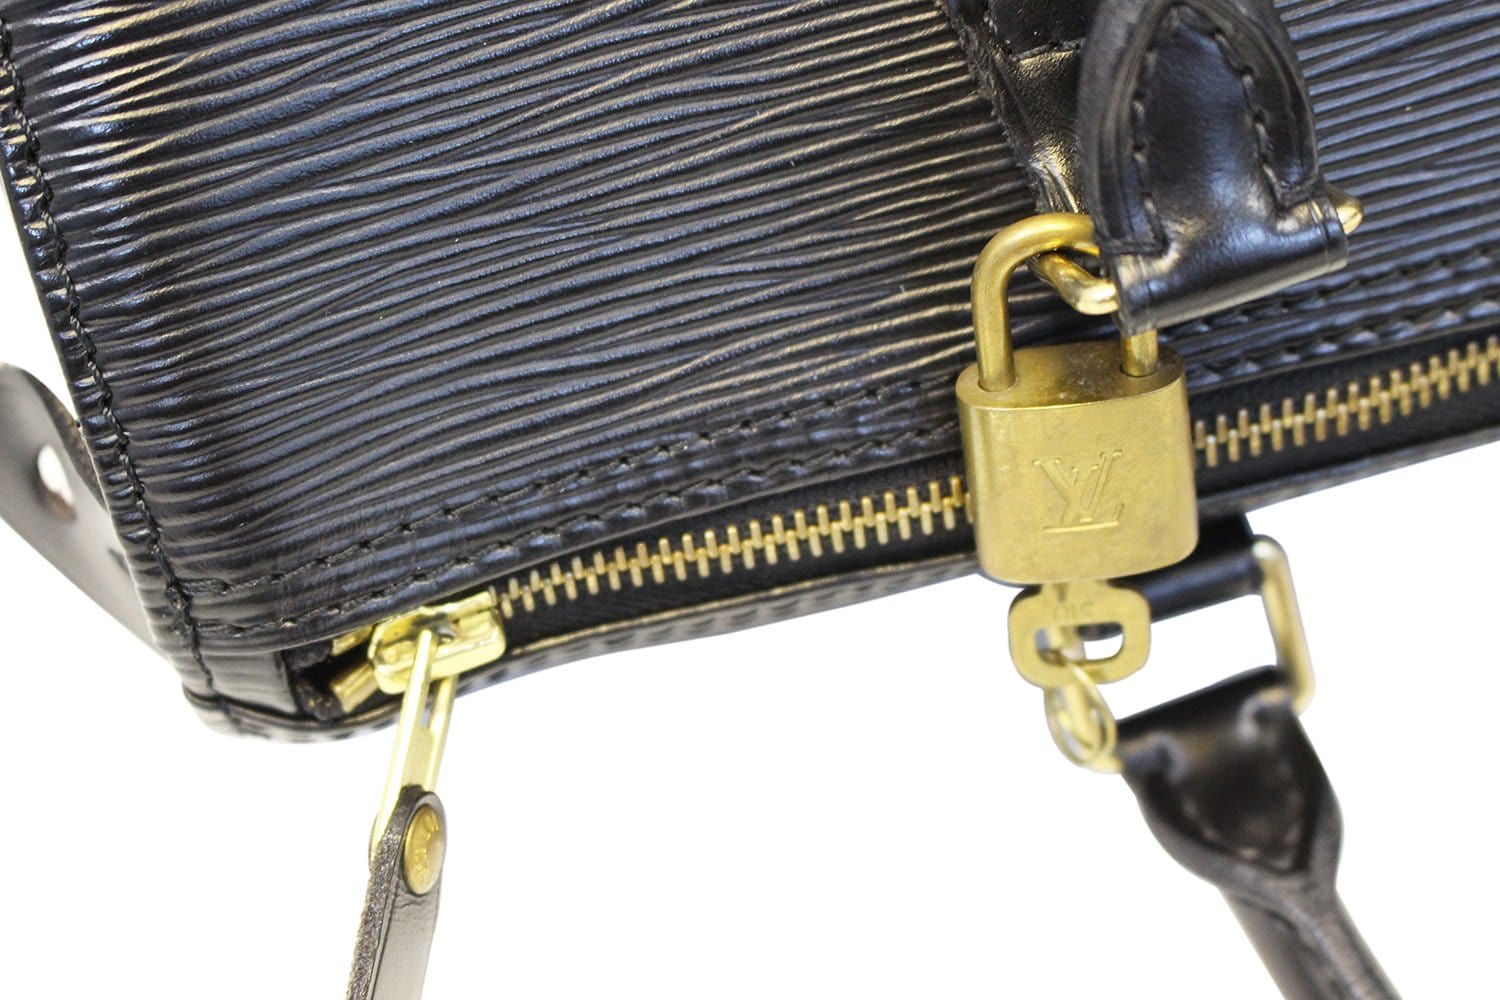 Louis Vuitton Vintage Black Epi Leather Speedy 30 – Oliver Jewellery